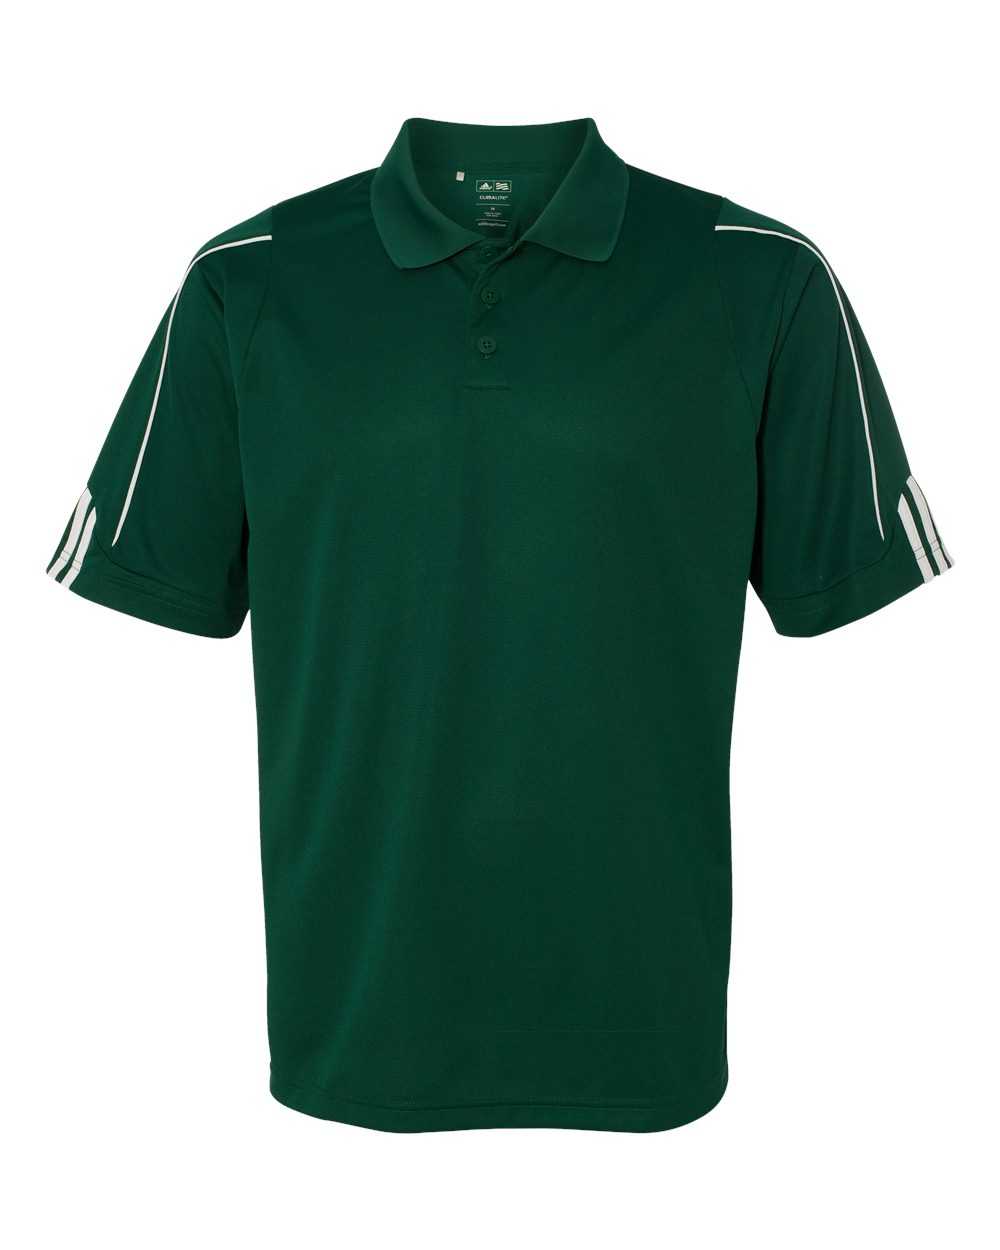 Adidas A76 3-Stripes Cuff Sport Shirt - Collegiate Green White - HIT a Double